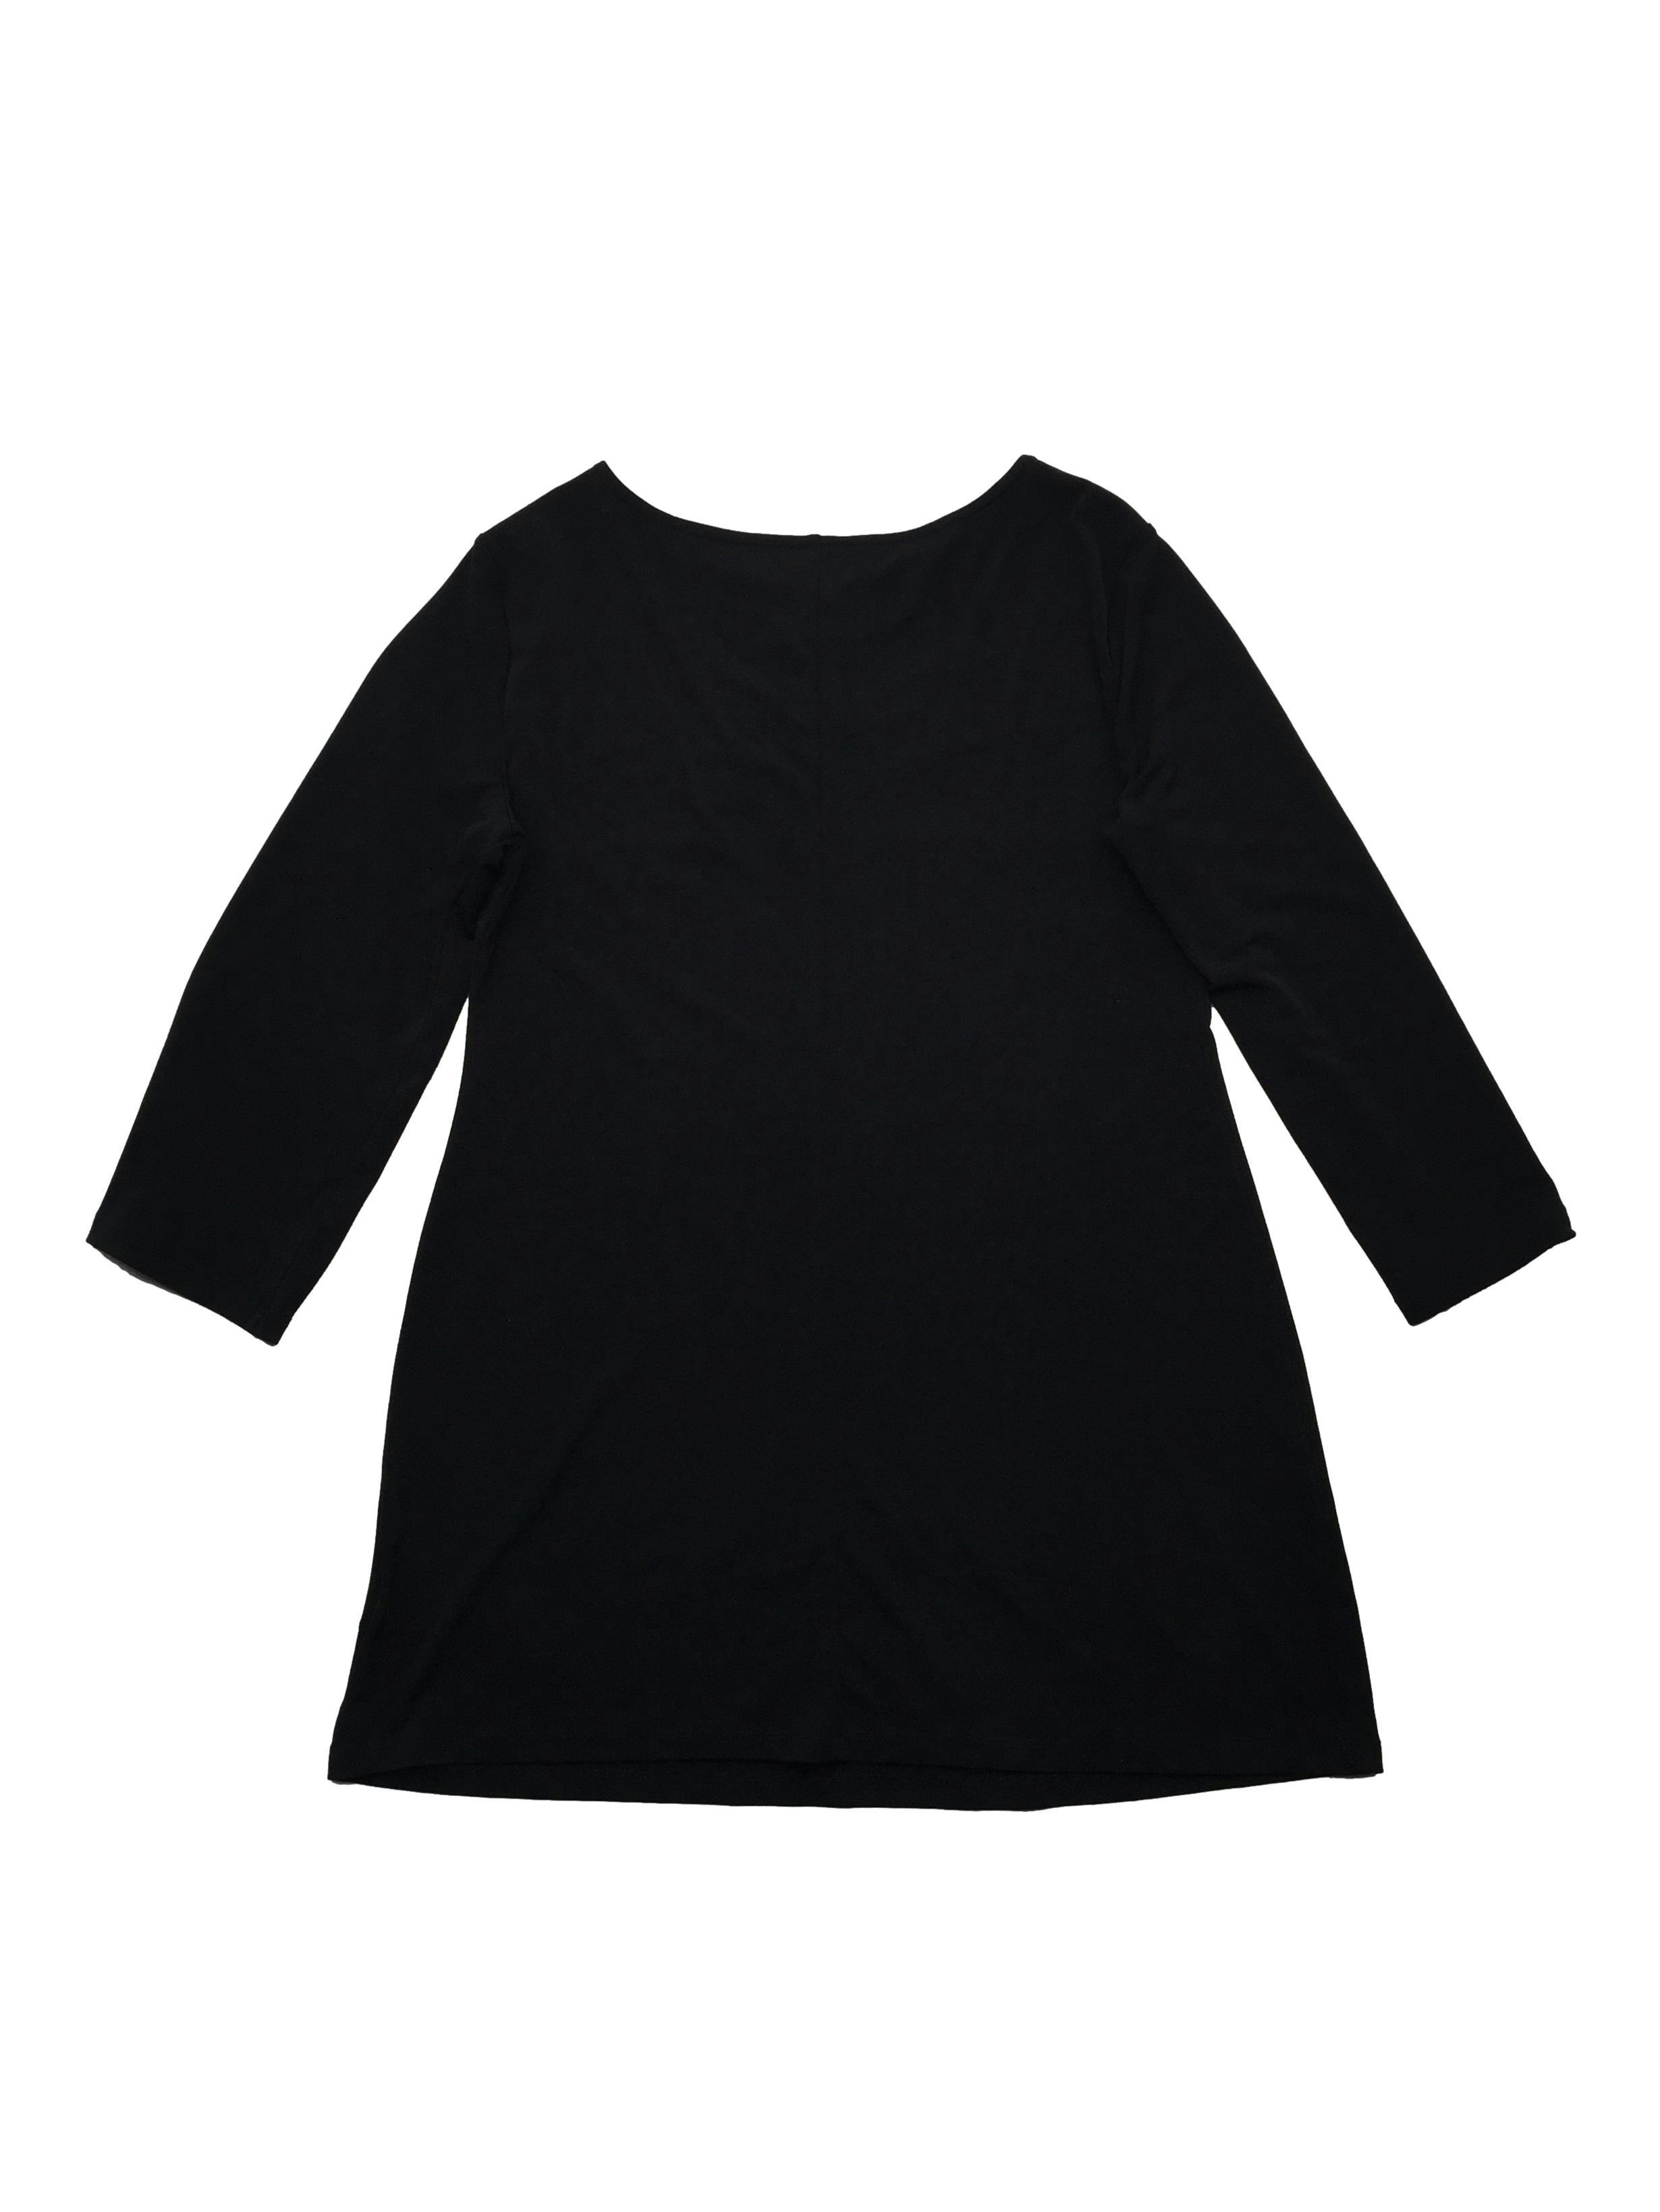 Blusa negra de tela spandex suave al taco con aplicaciones, manga 3/4. Busto 90cm , Largo 70cm.